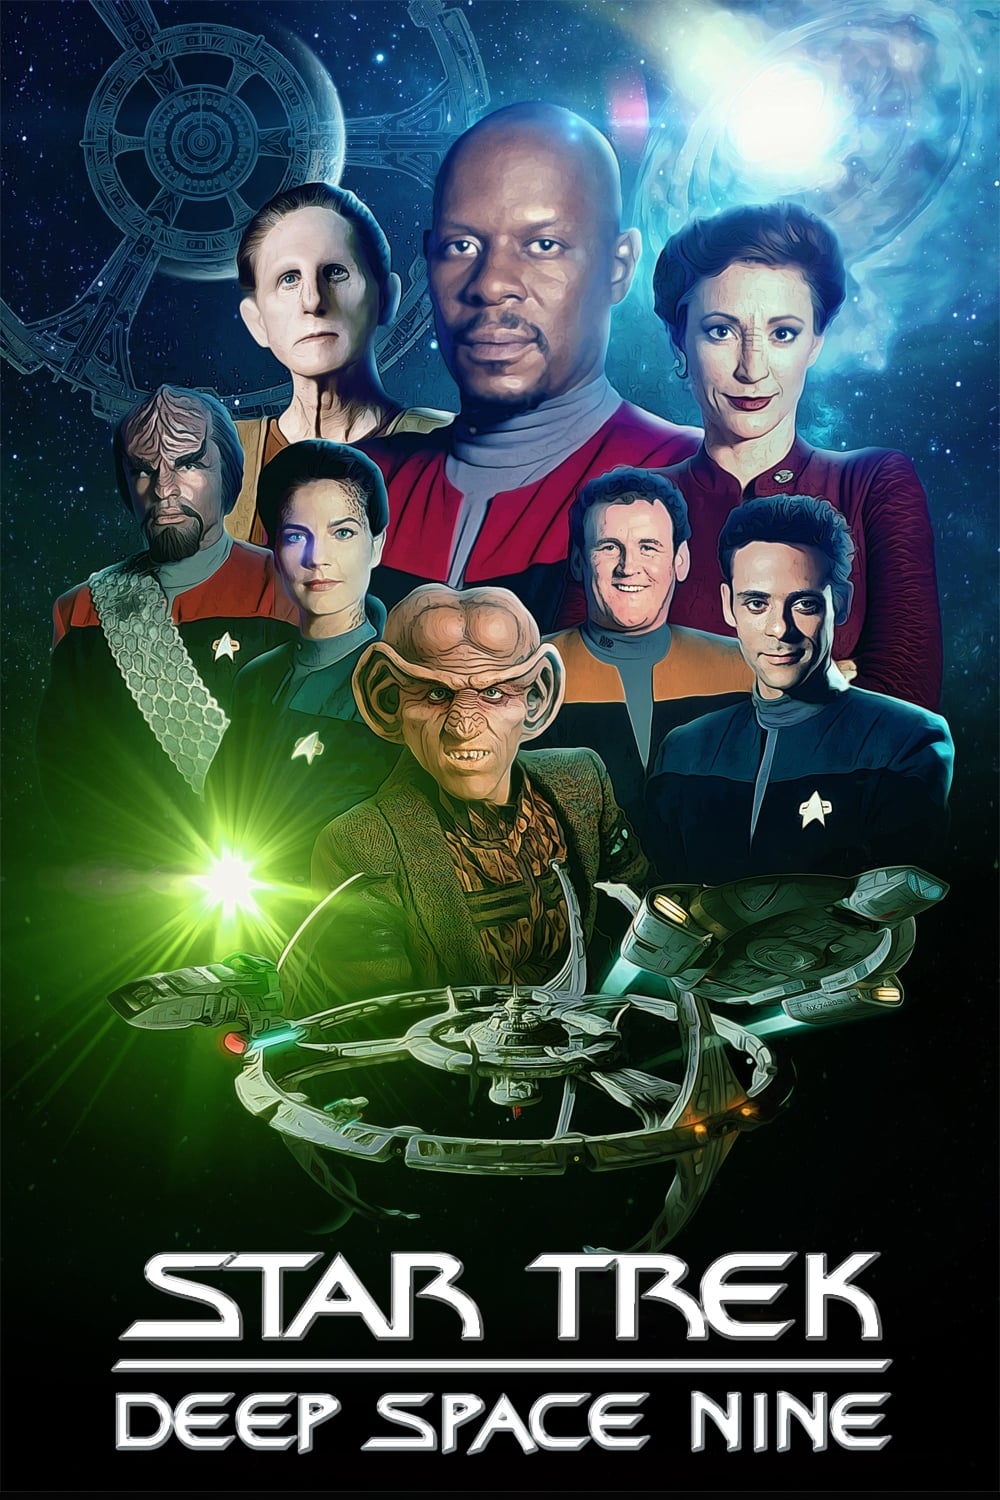 Star Trek: Deep Space Nine TV Shows About Starship